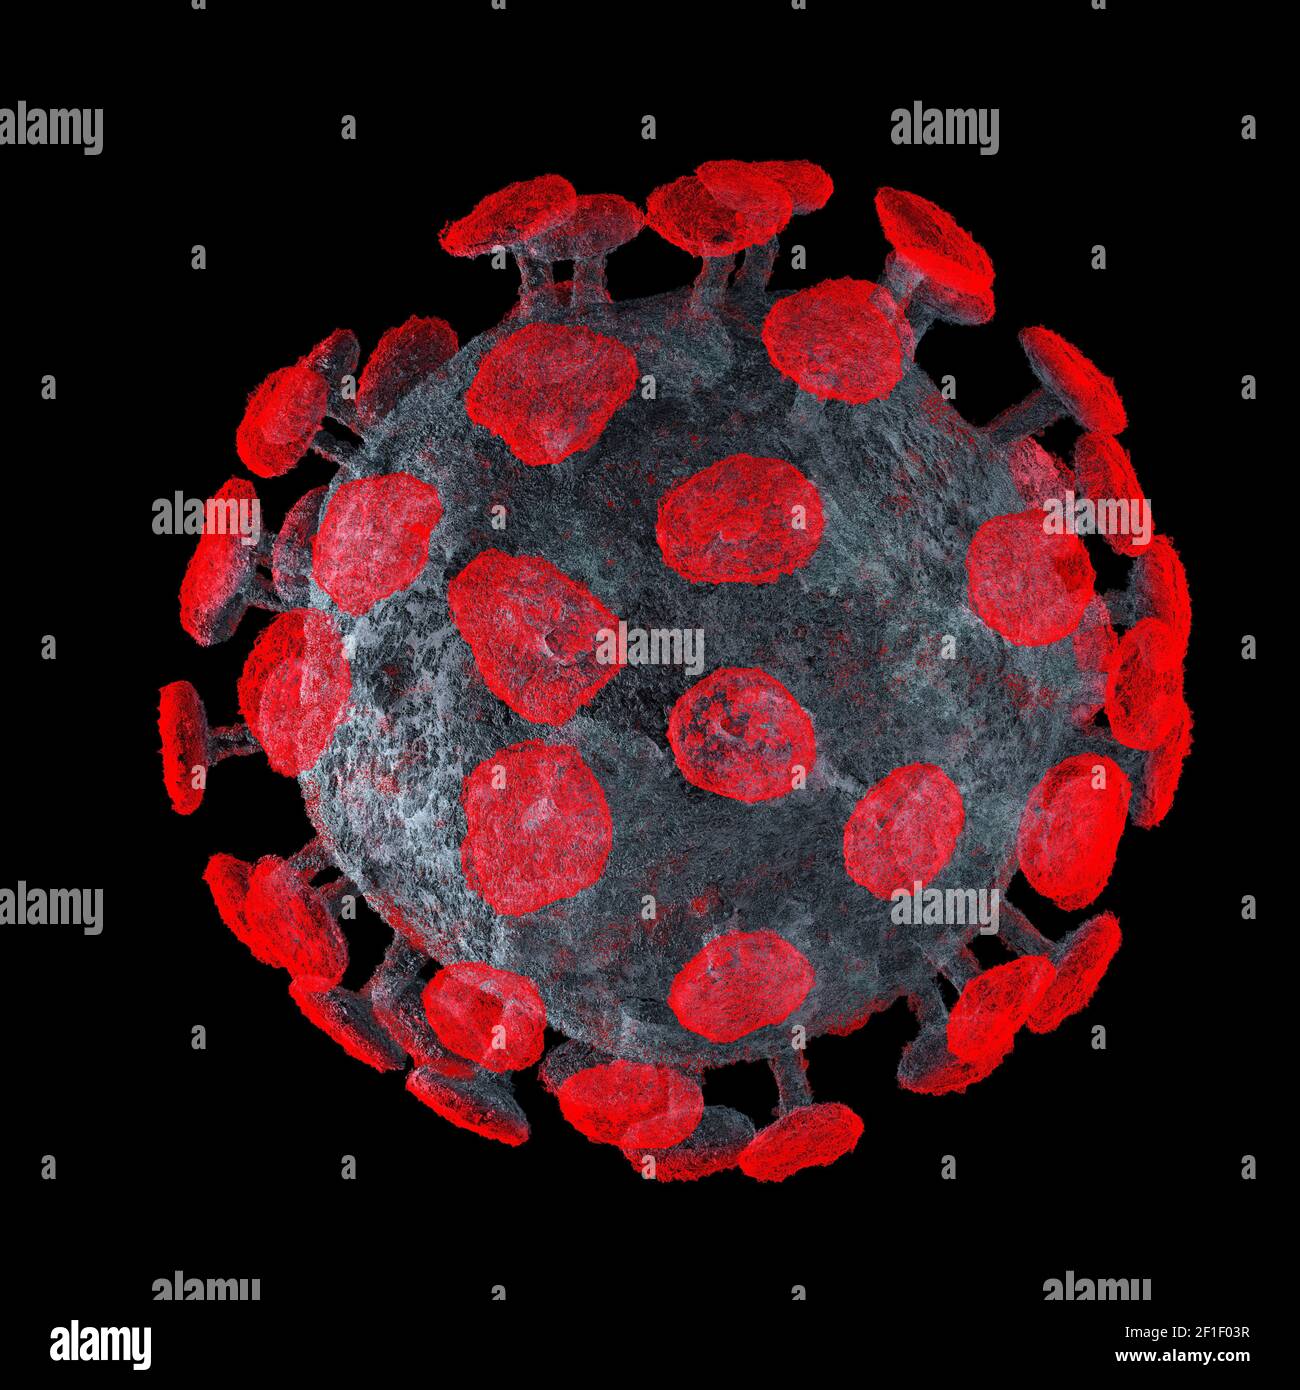 Coronavirus COVID19 concept, virus of human microscope view on black background Stock Photo